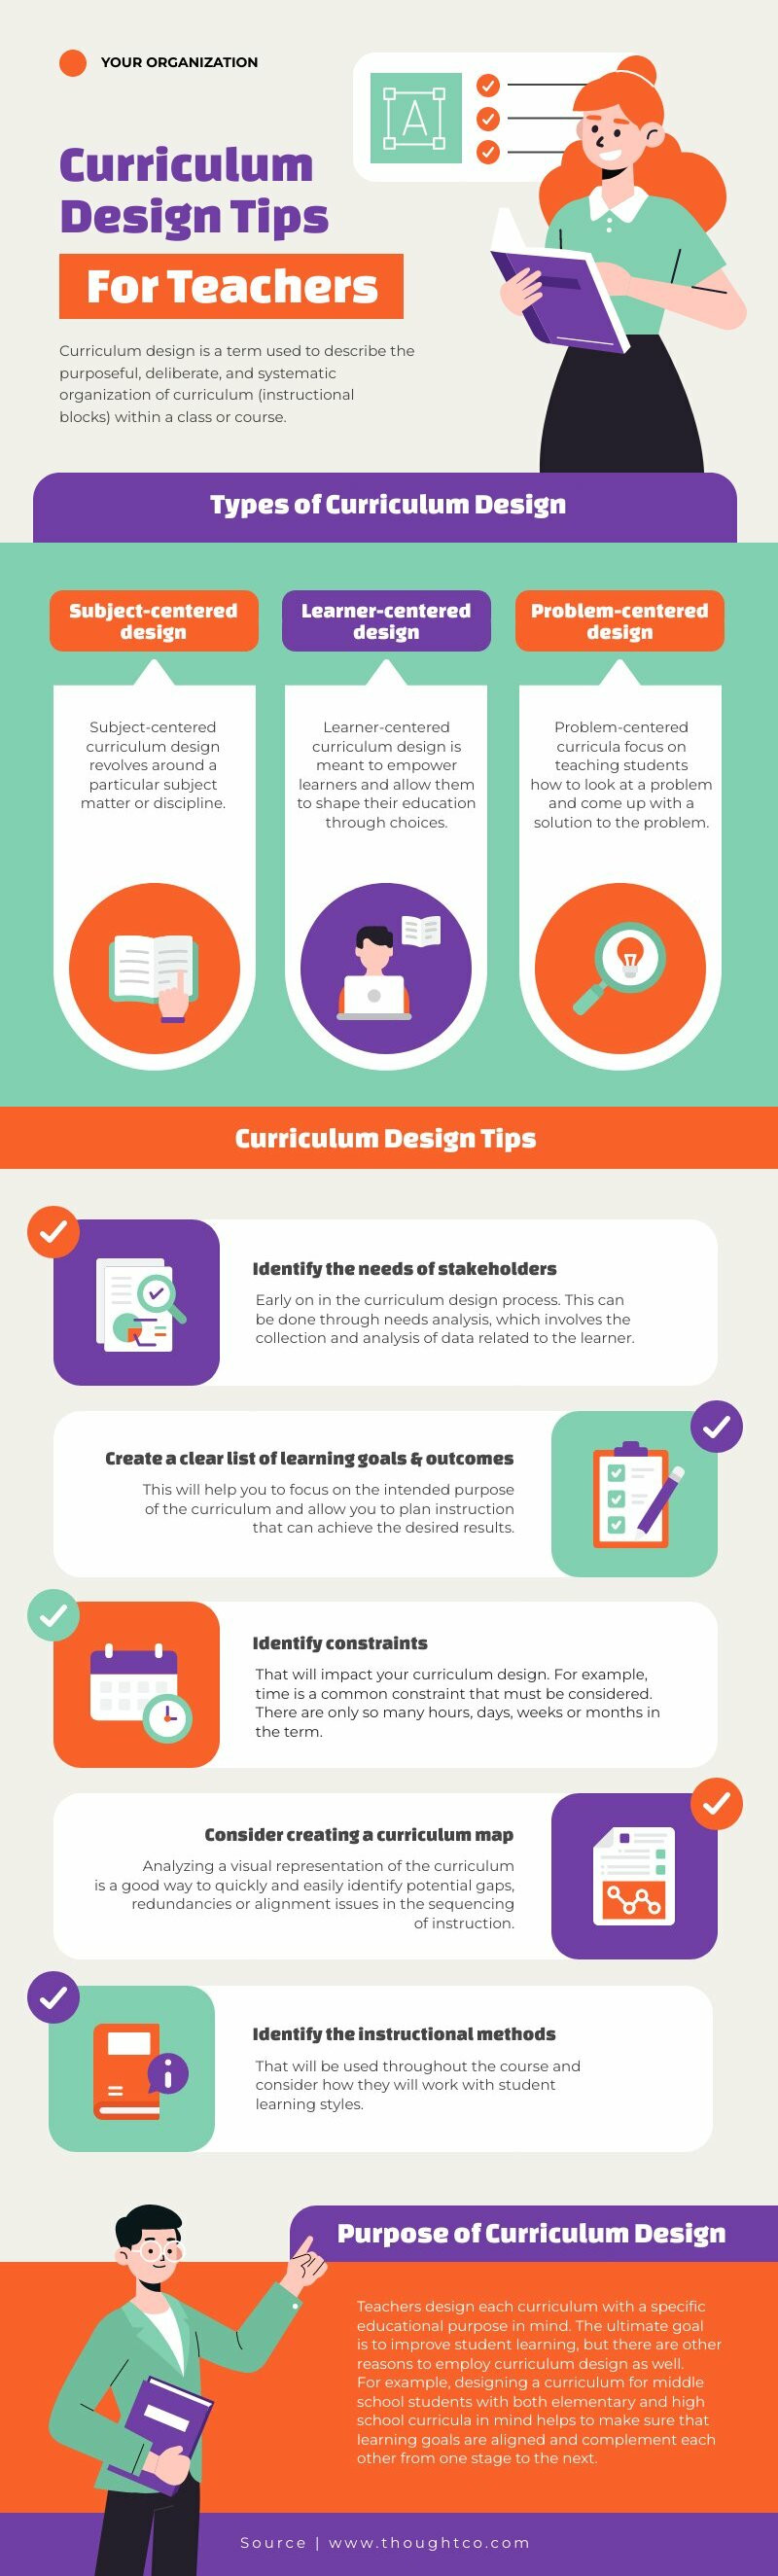 Curriculum Design Tips for Teachers